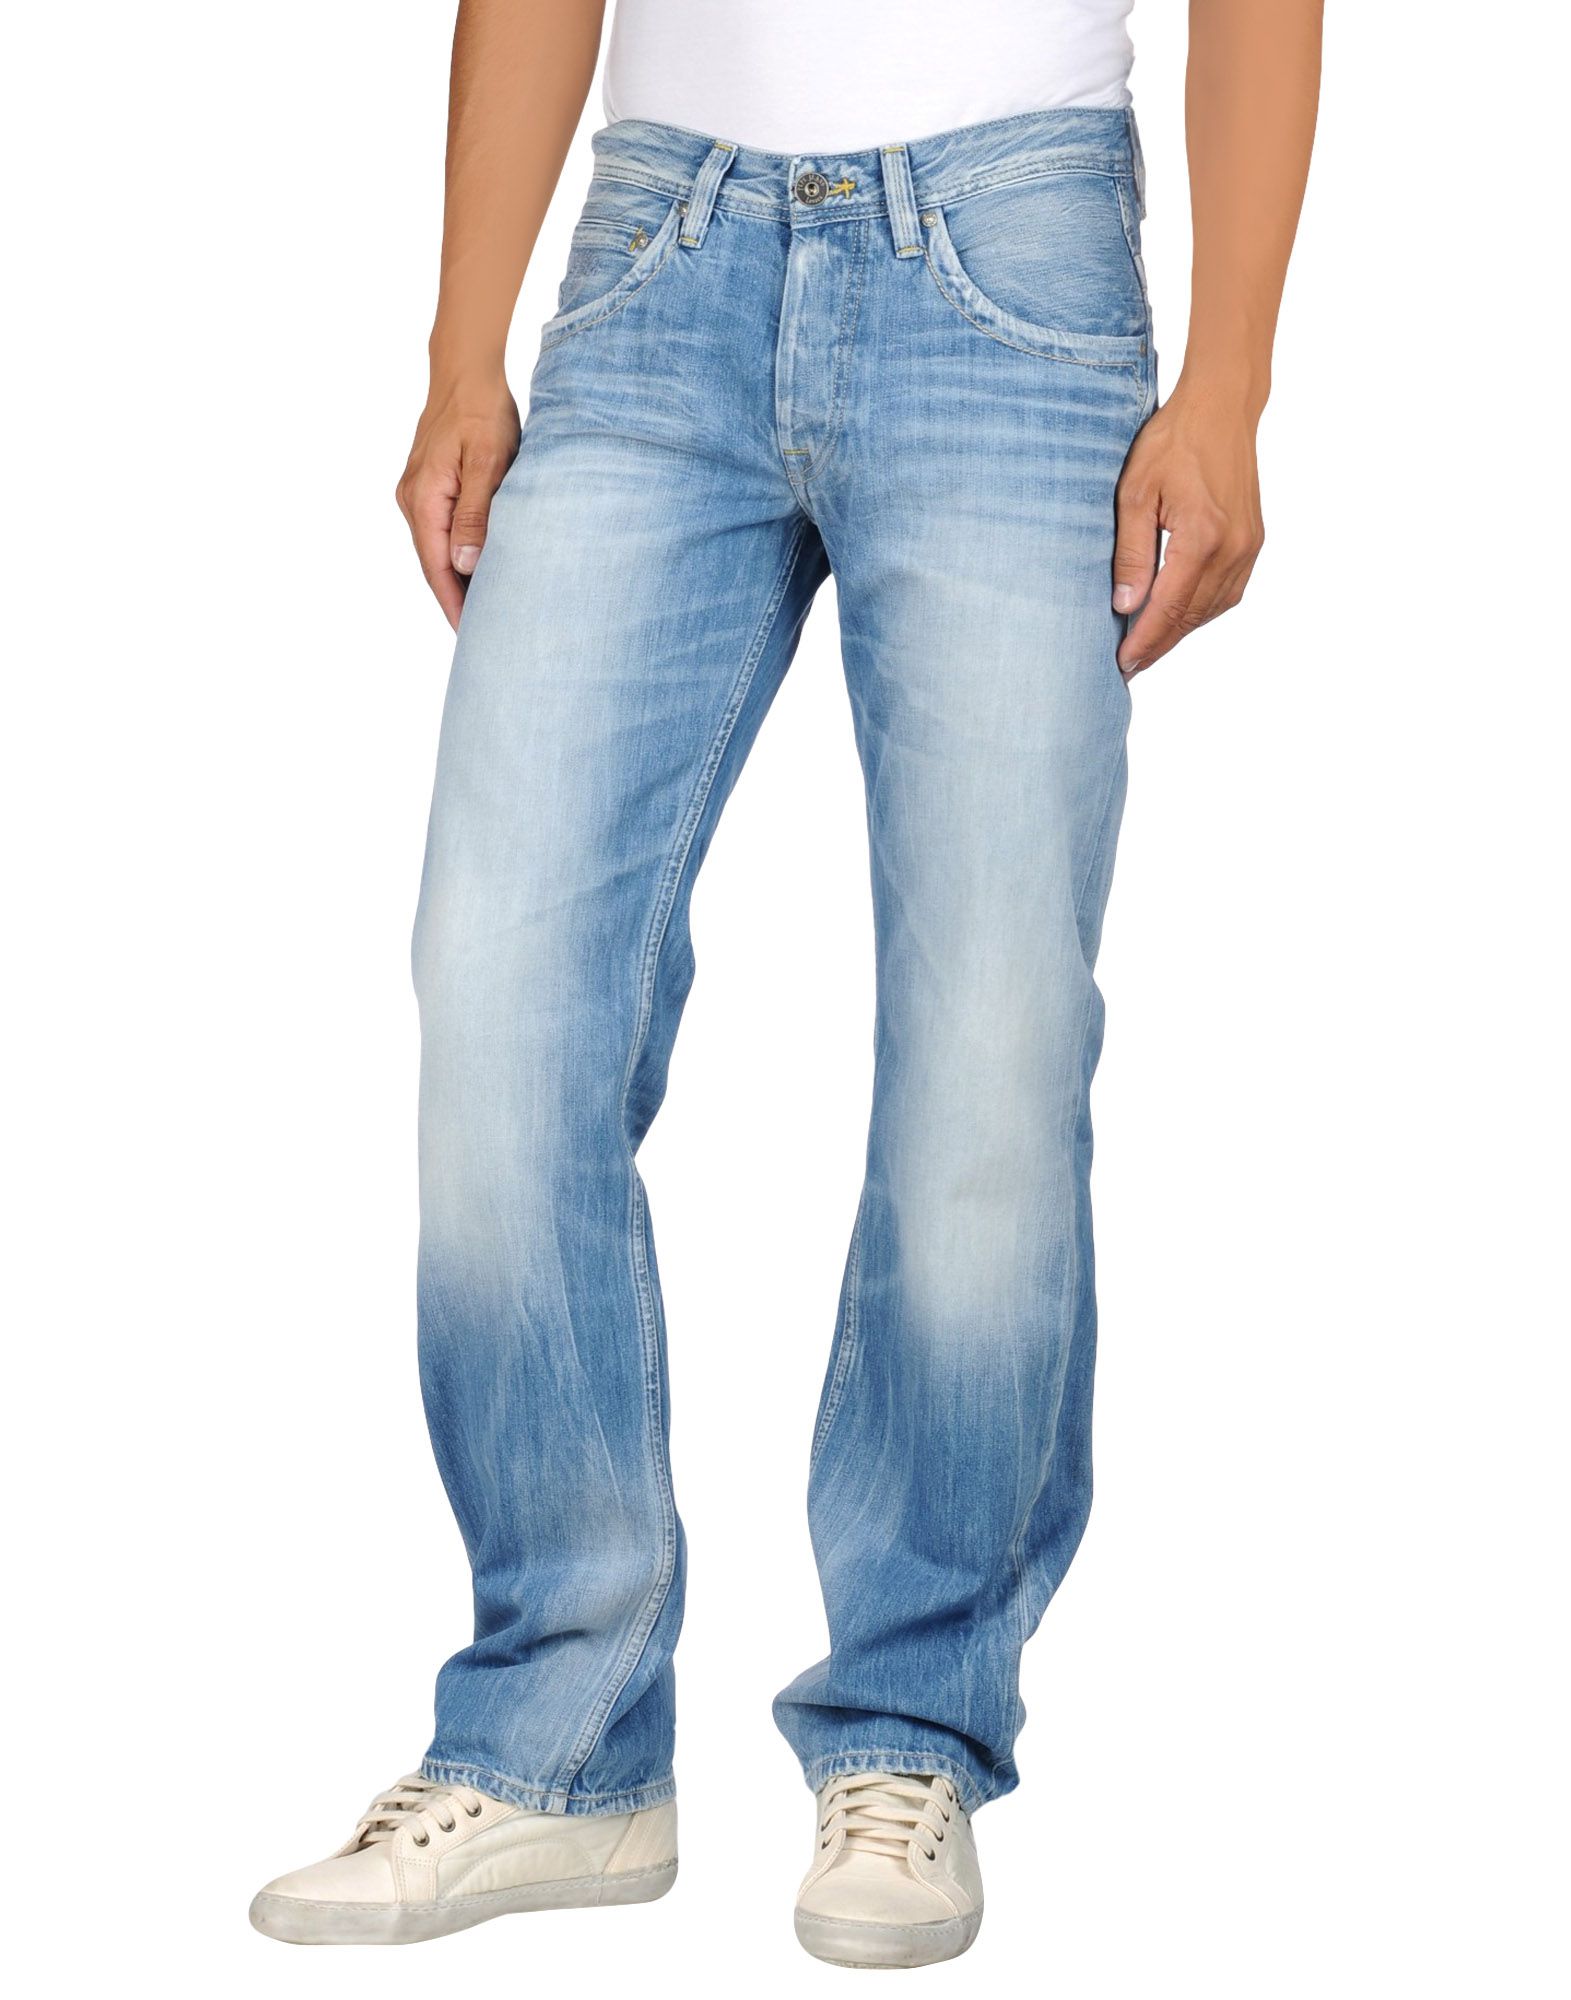 Foto pepe jeans pantalones vaqueros Hombre Azul marino